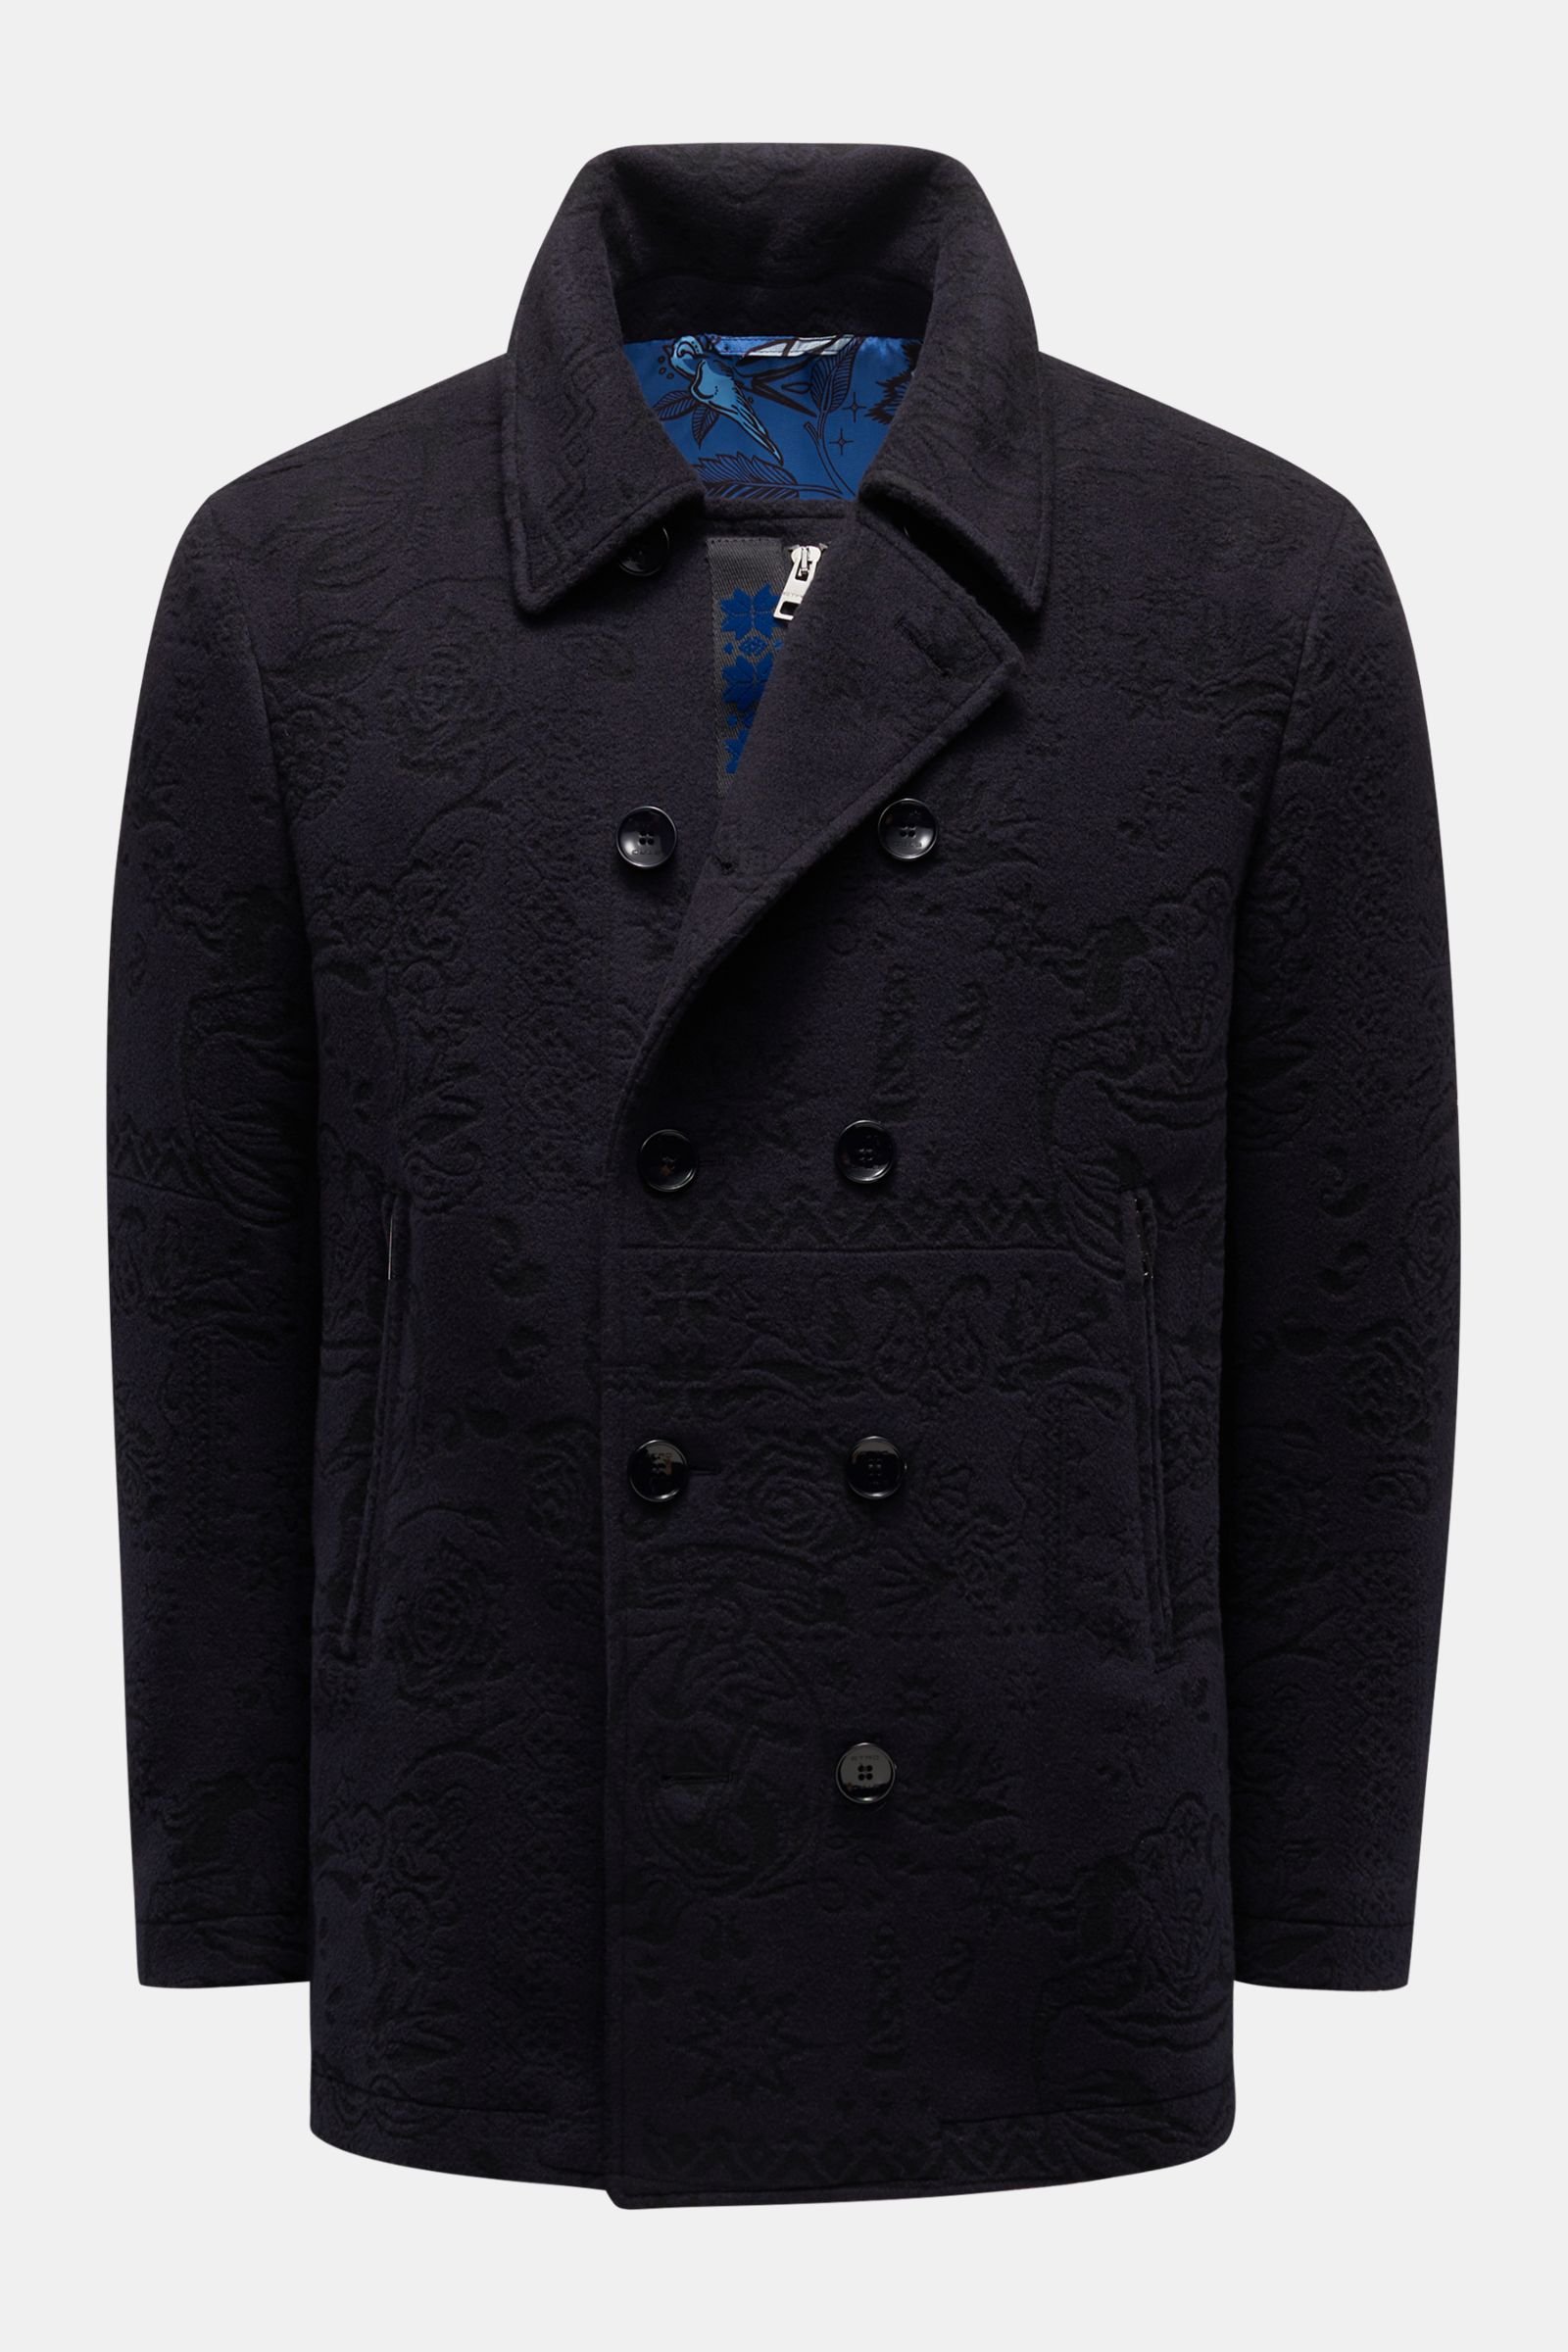 Wool jacket navy/black patterned